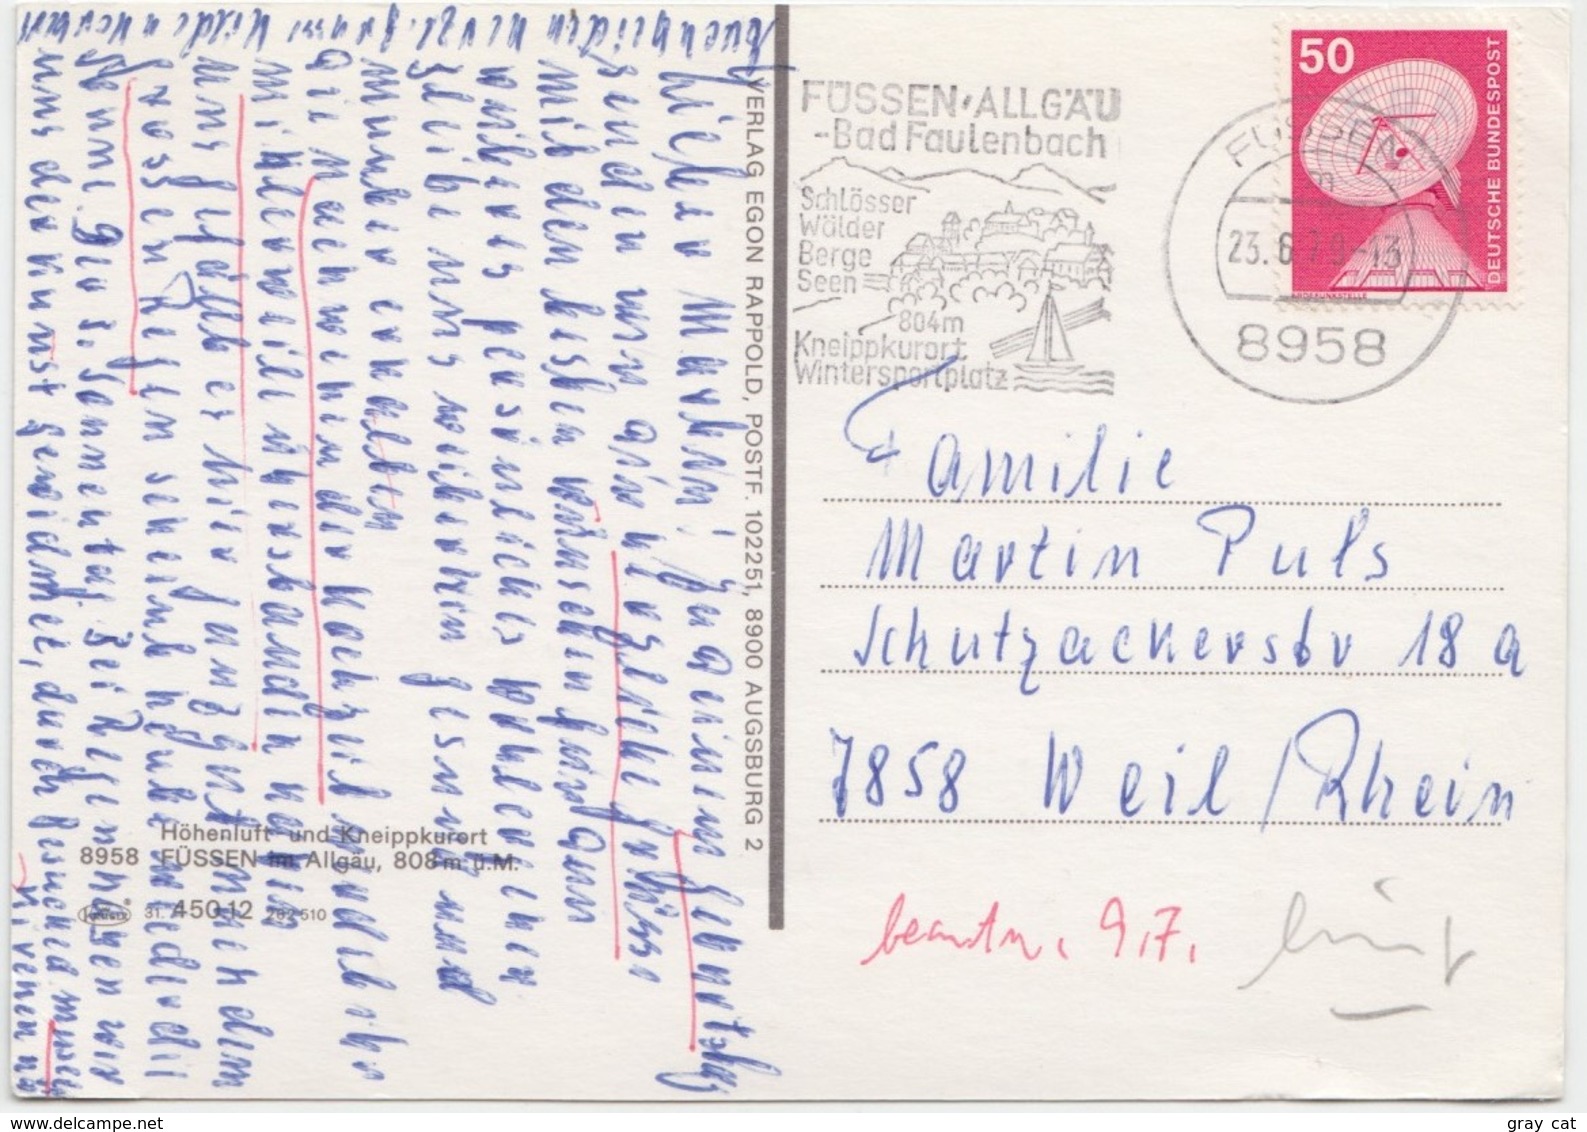 Grusse Aus  FUSSEN / ALLGAU, Multi View, Germany, 1979 Used Postcard [22023] - Fuessen